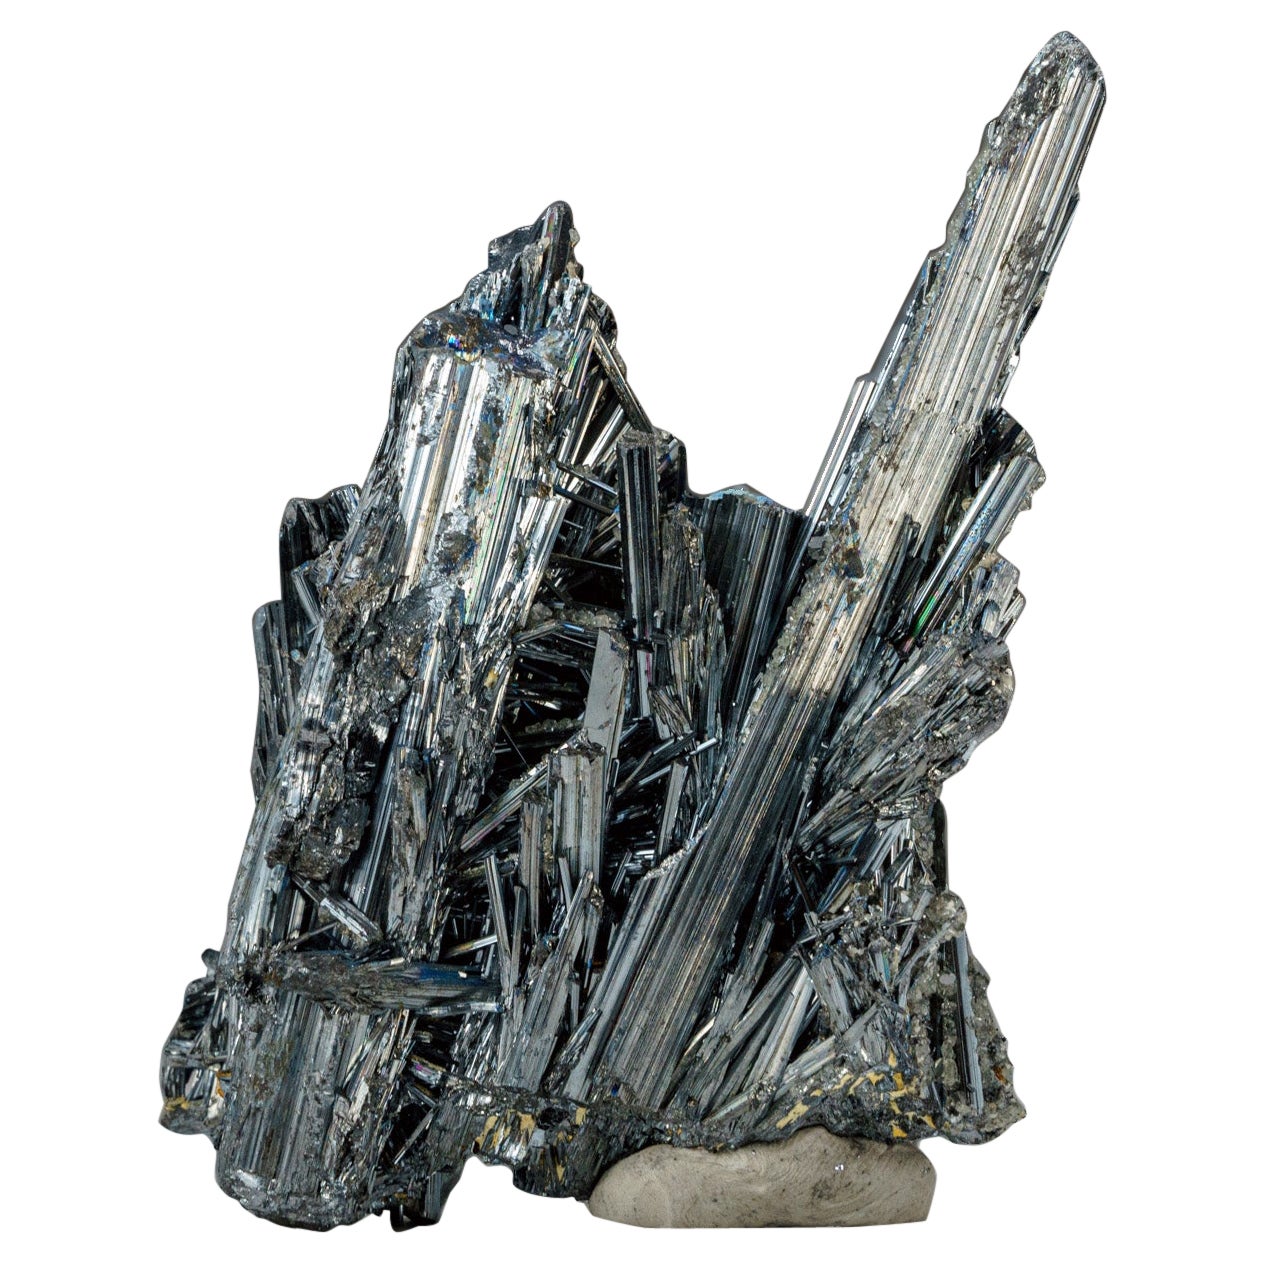 Stibnit aus der Wuling-Antimony-Mine, Qingjiang, Jiangxi, China